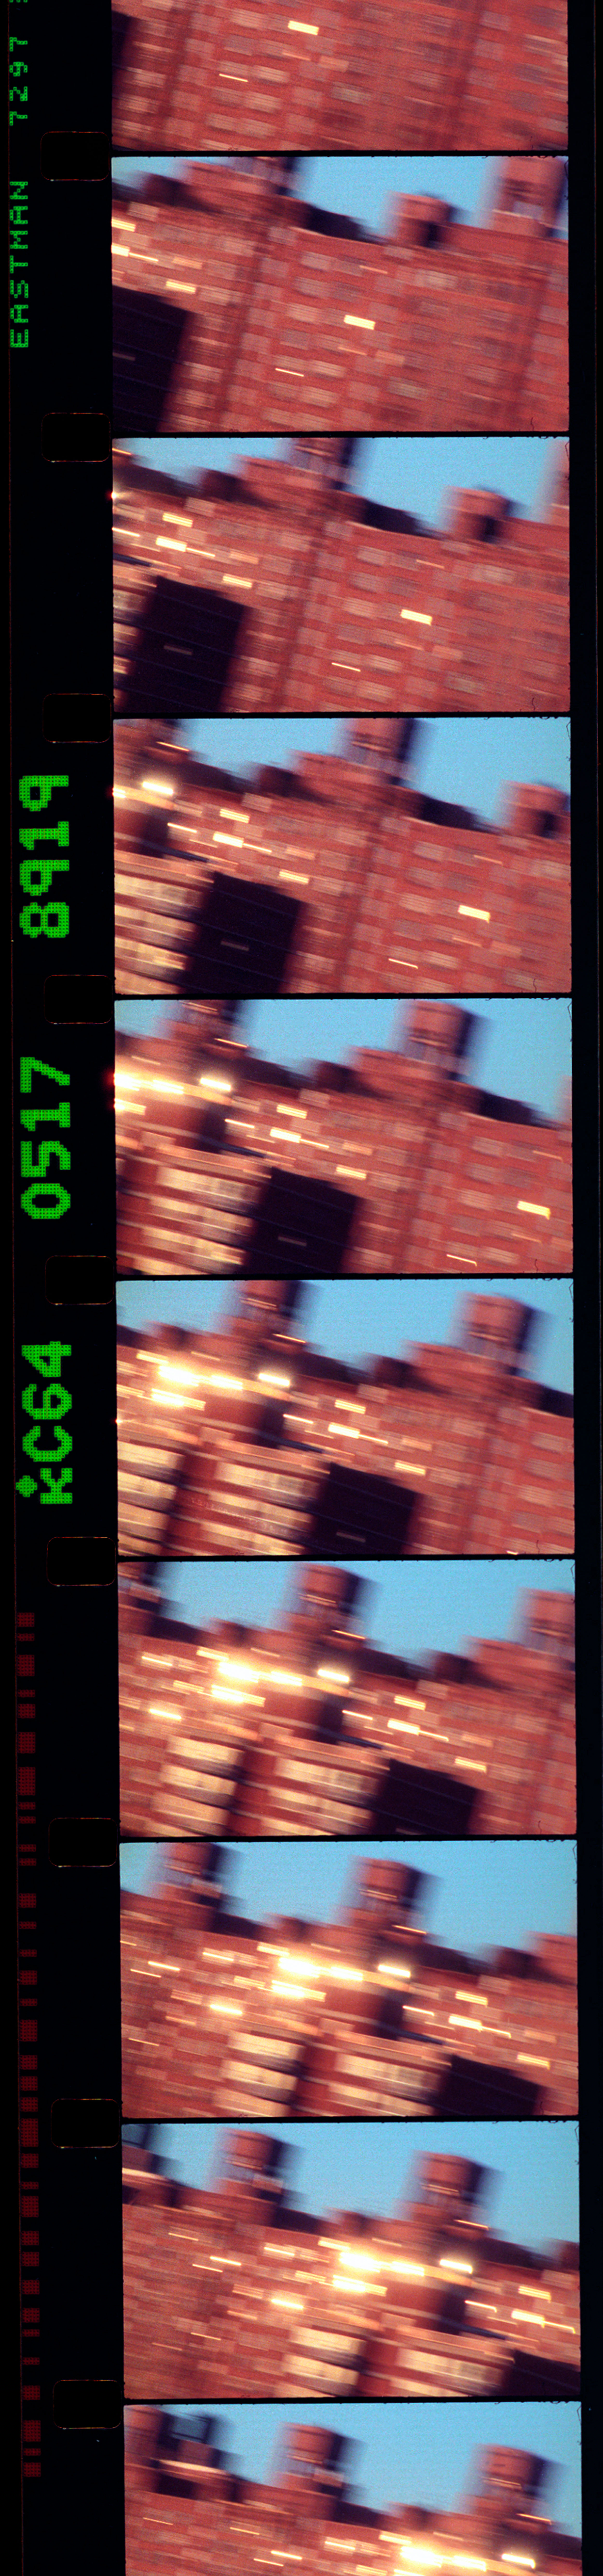 16mm-polo-building-blur-copy.jpg